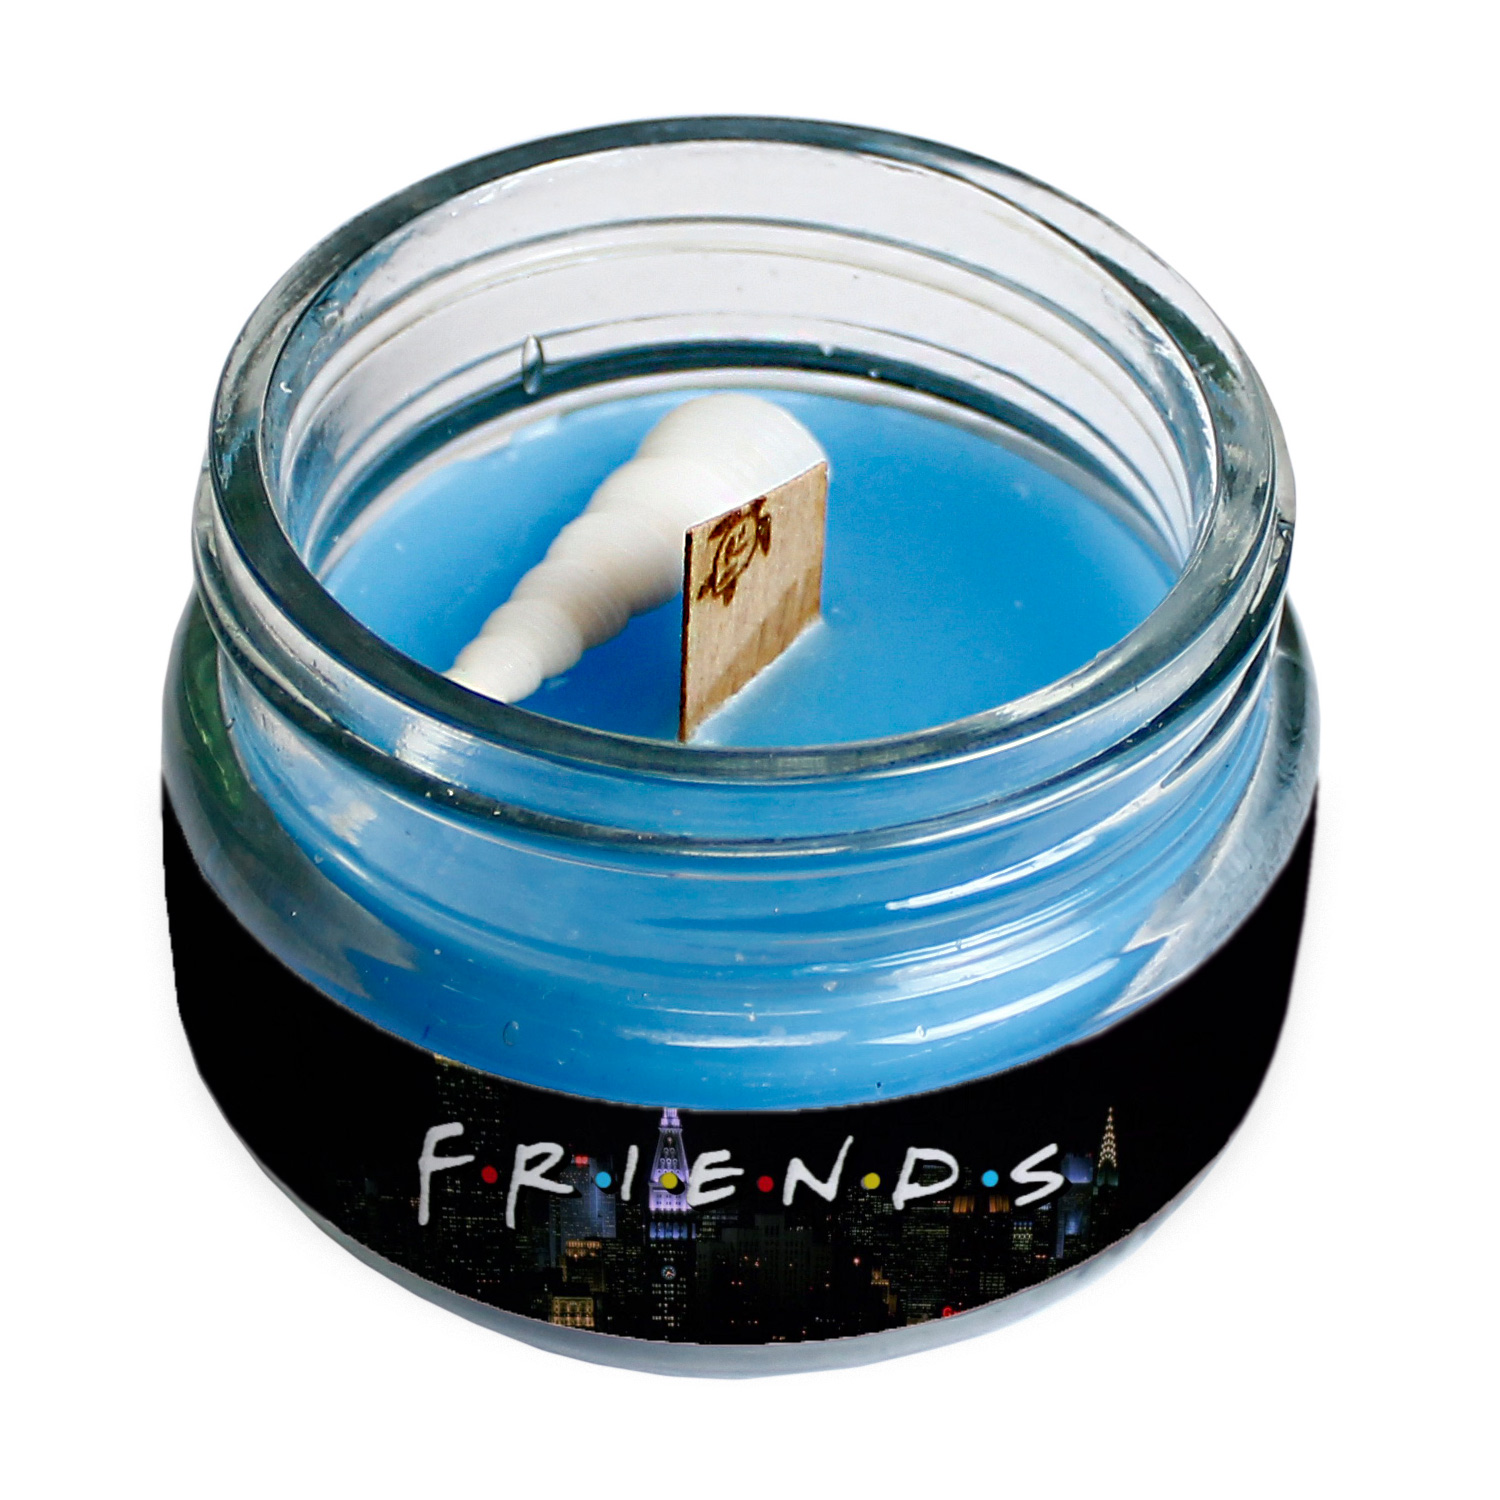 شمع لیوانی طرح Friends مدل C186